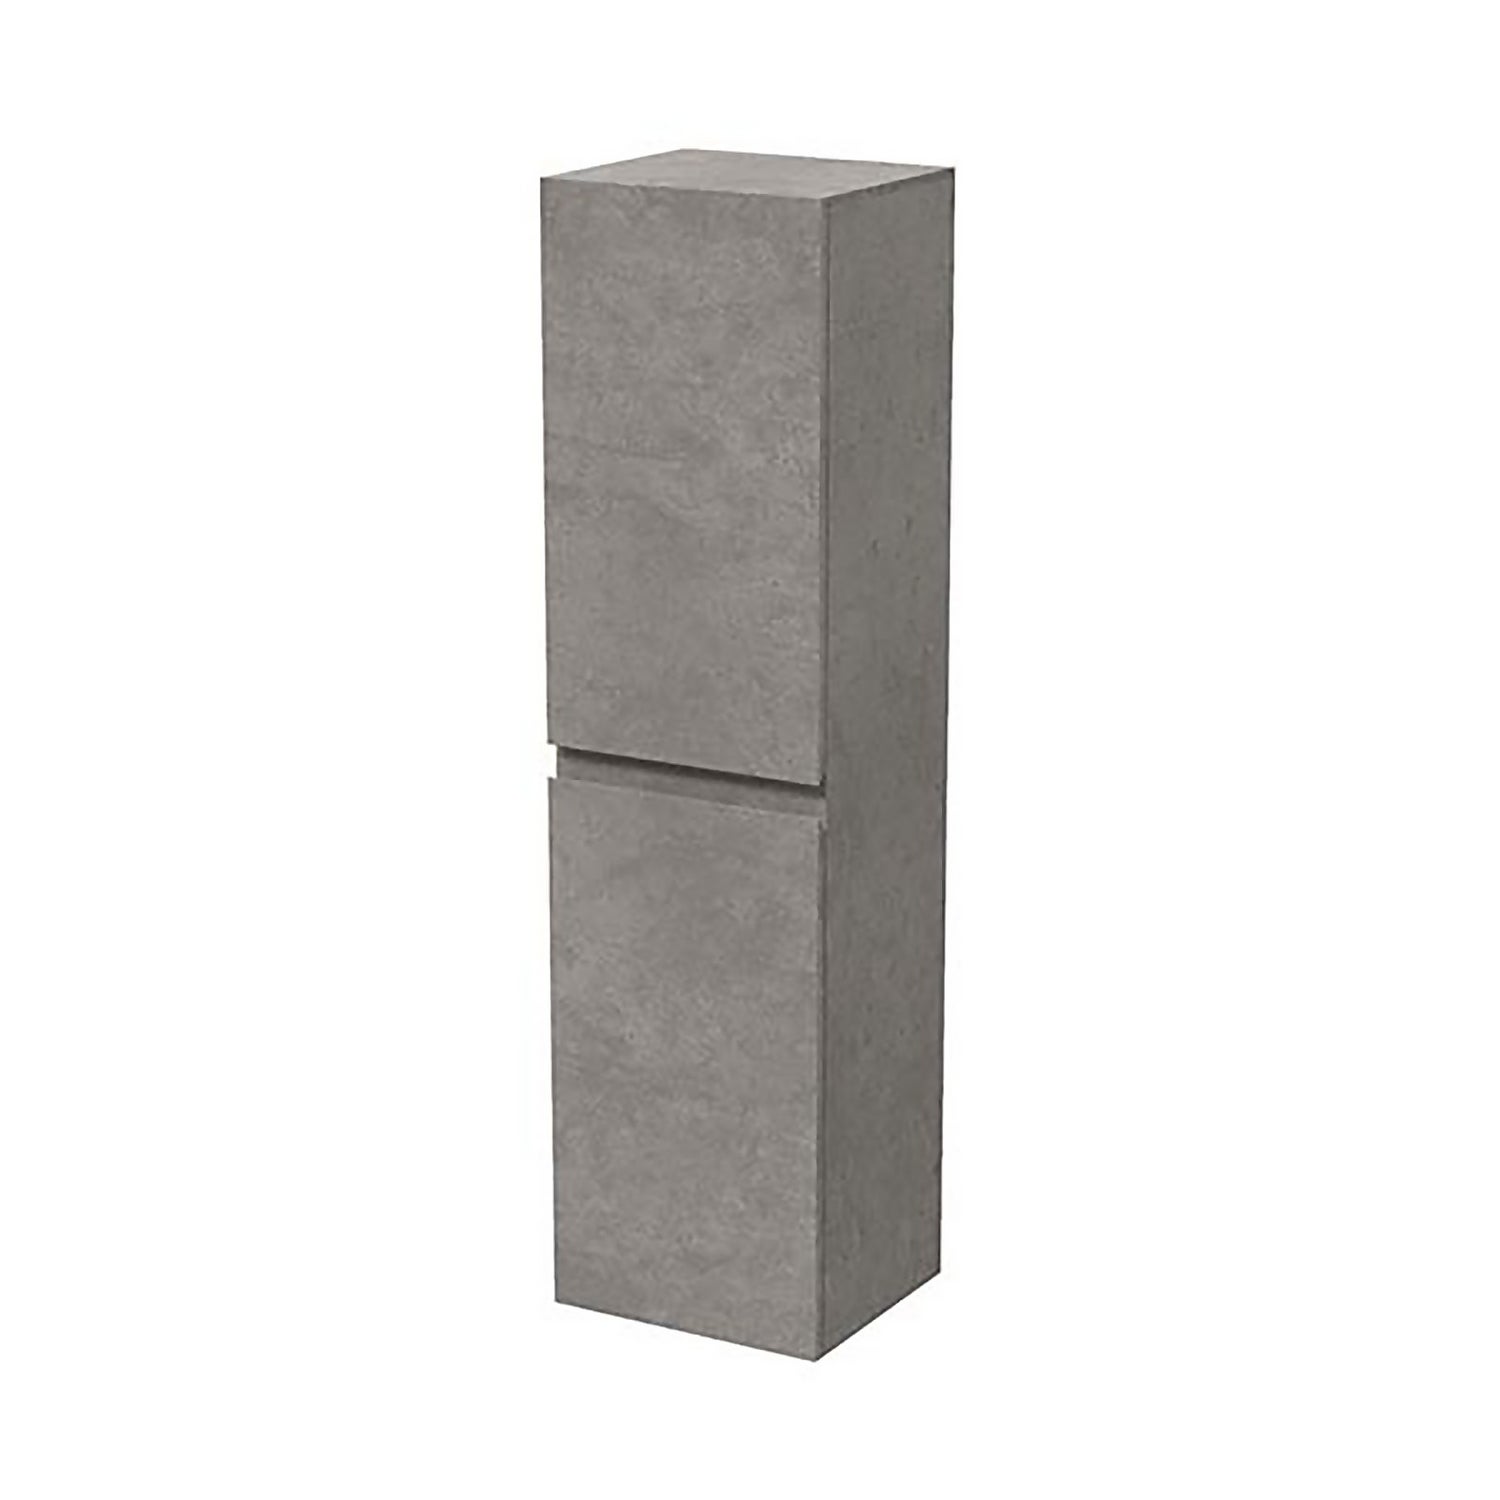 Mino Tall Wall Hung Storage Unit - Concrete